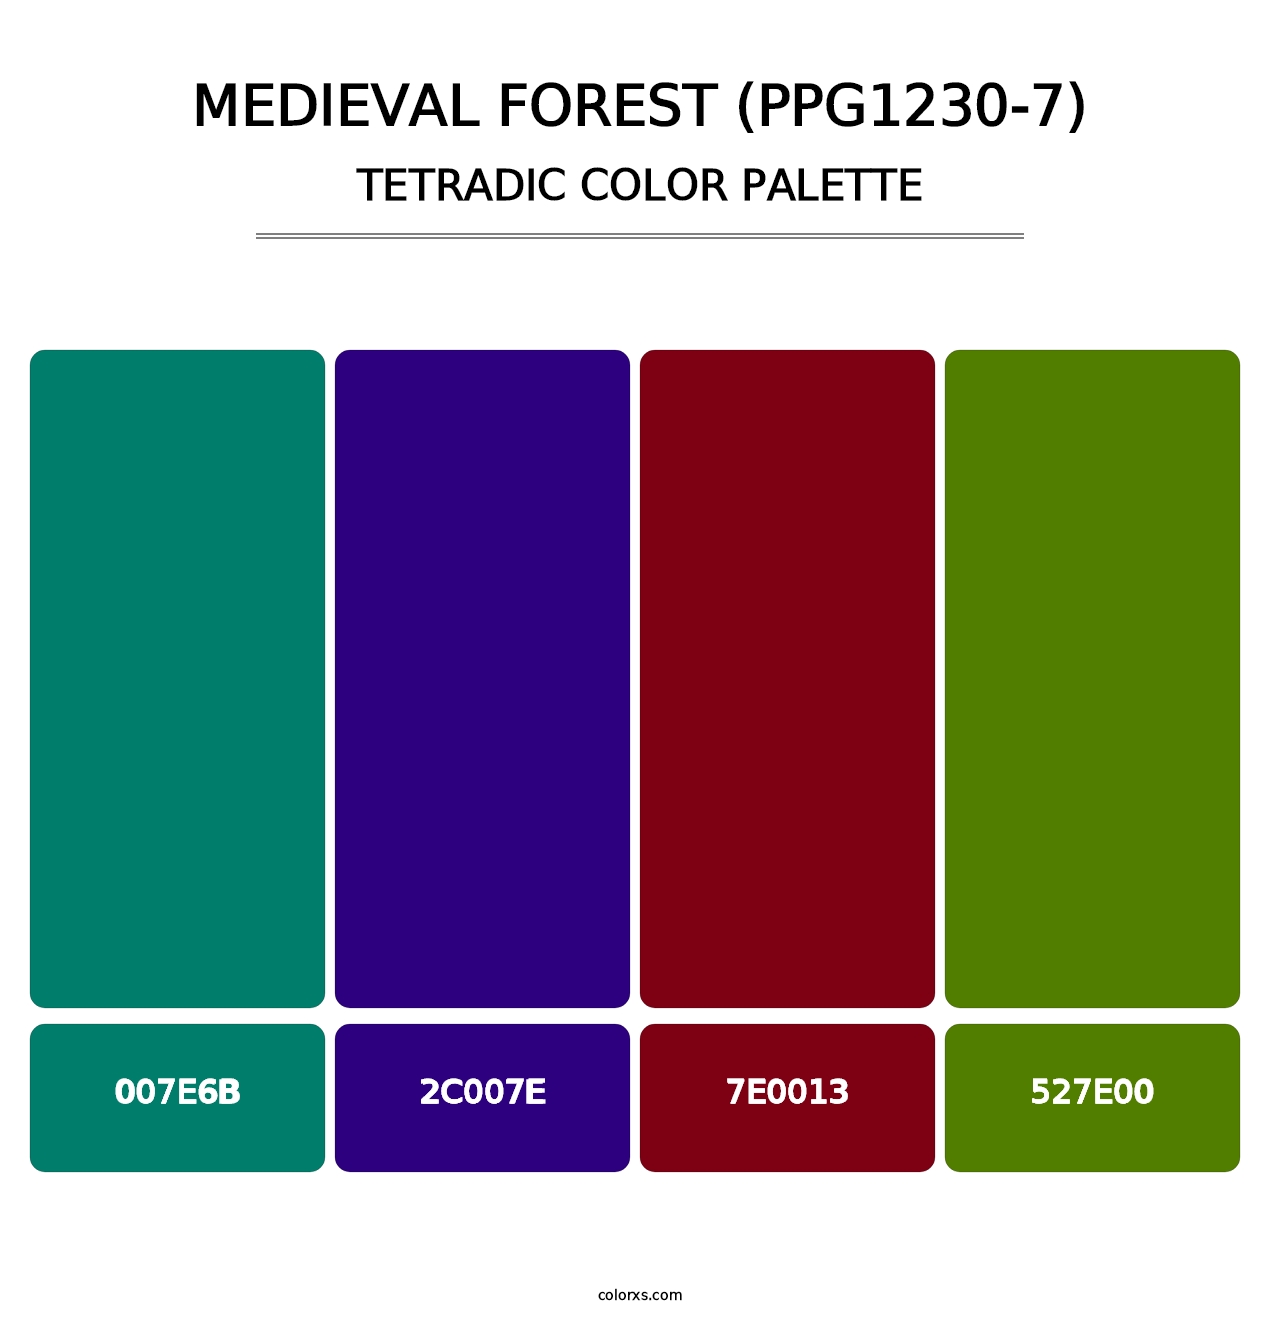 Medieval Forest (PPG1230-7) - Tetradic Color Palette